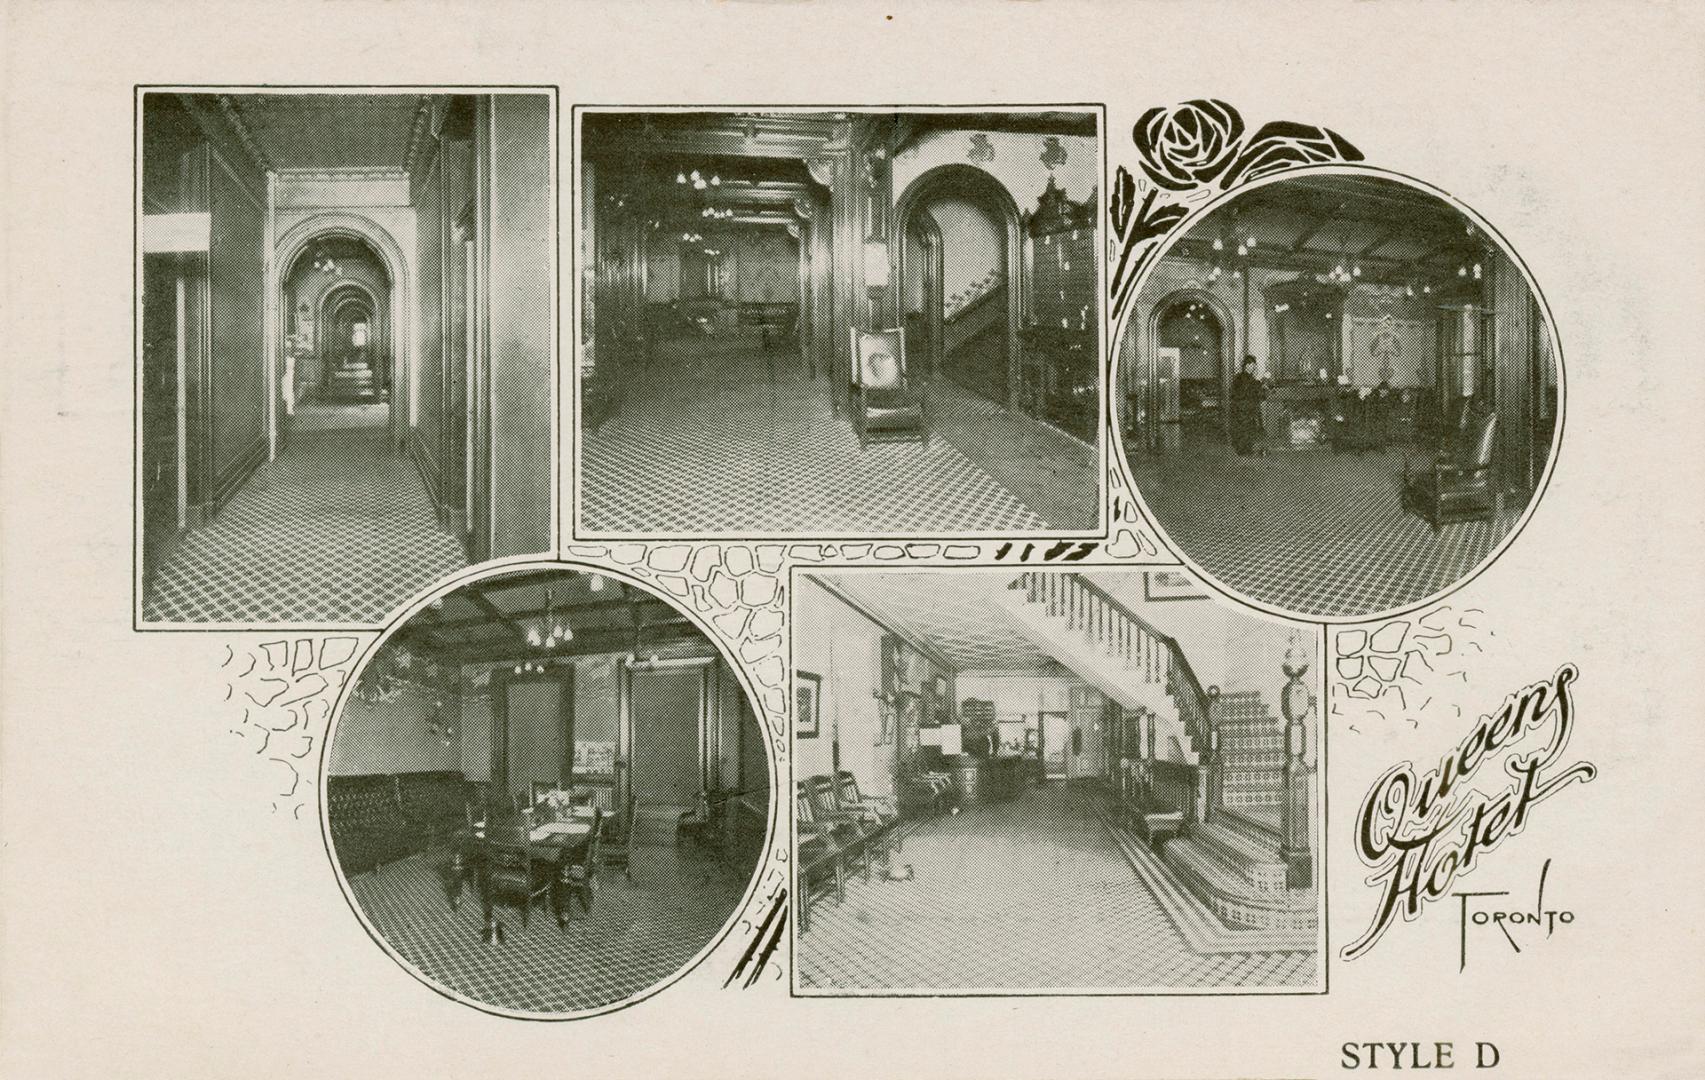 Shows five black and white scenes of a hotel interior.